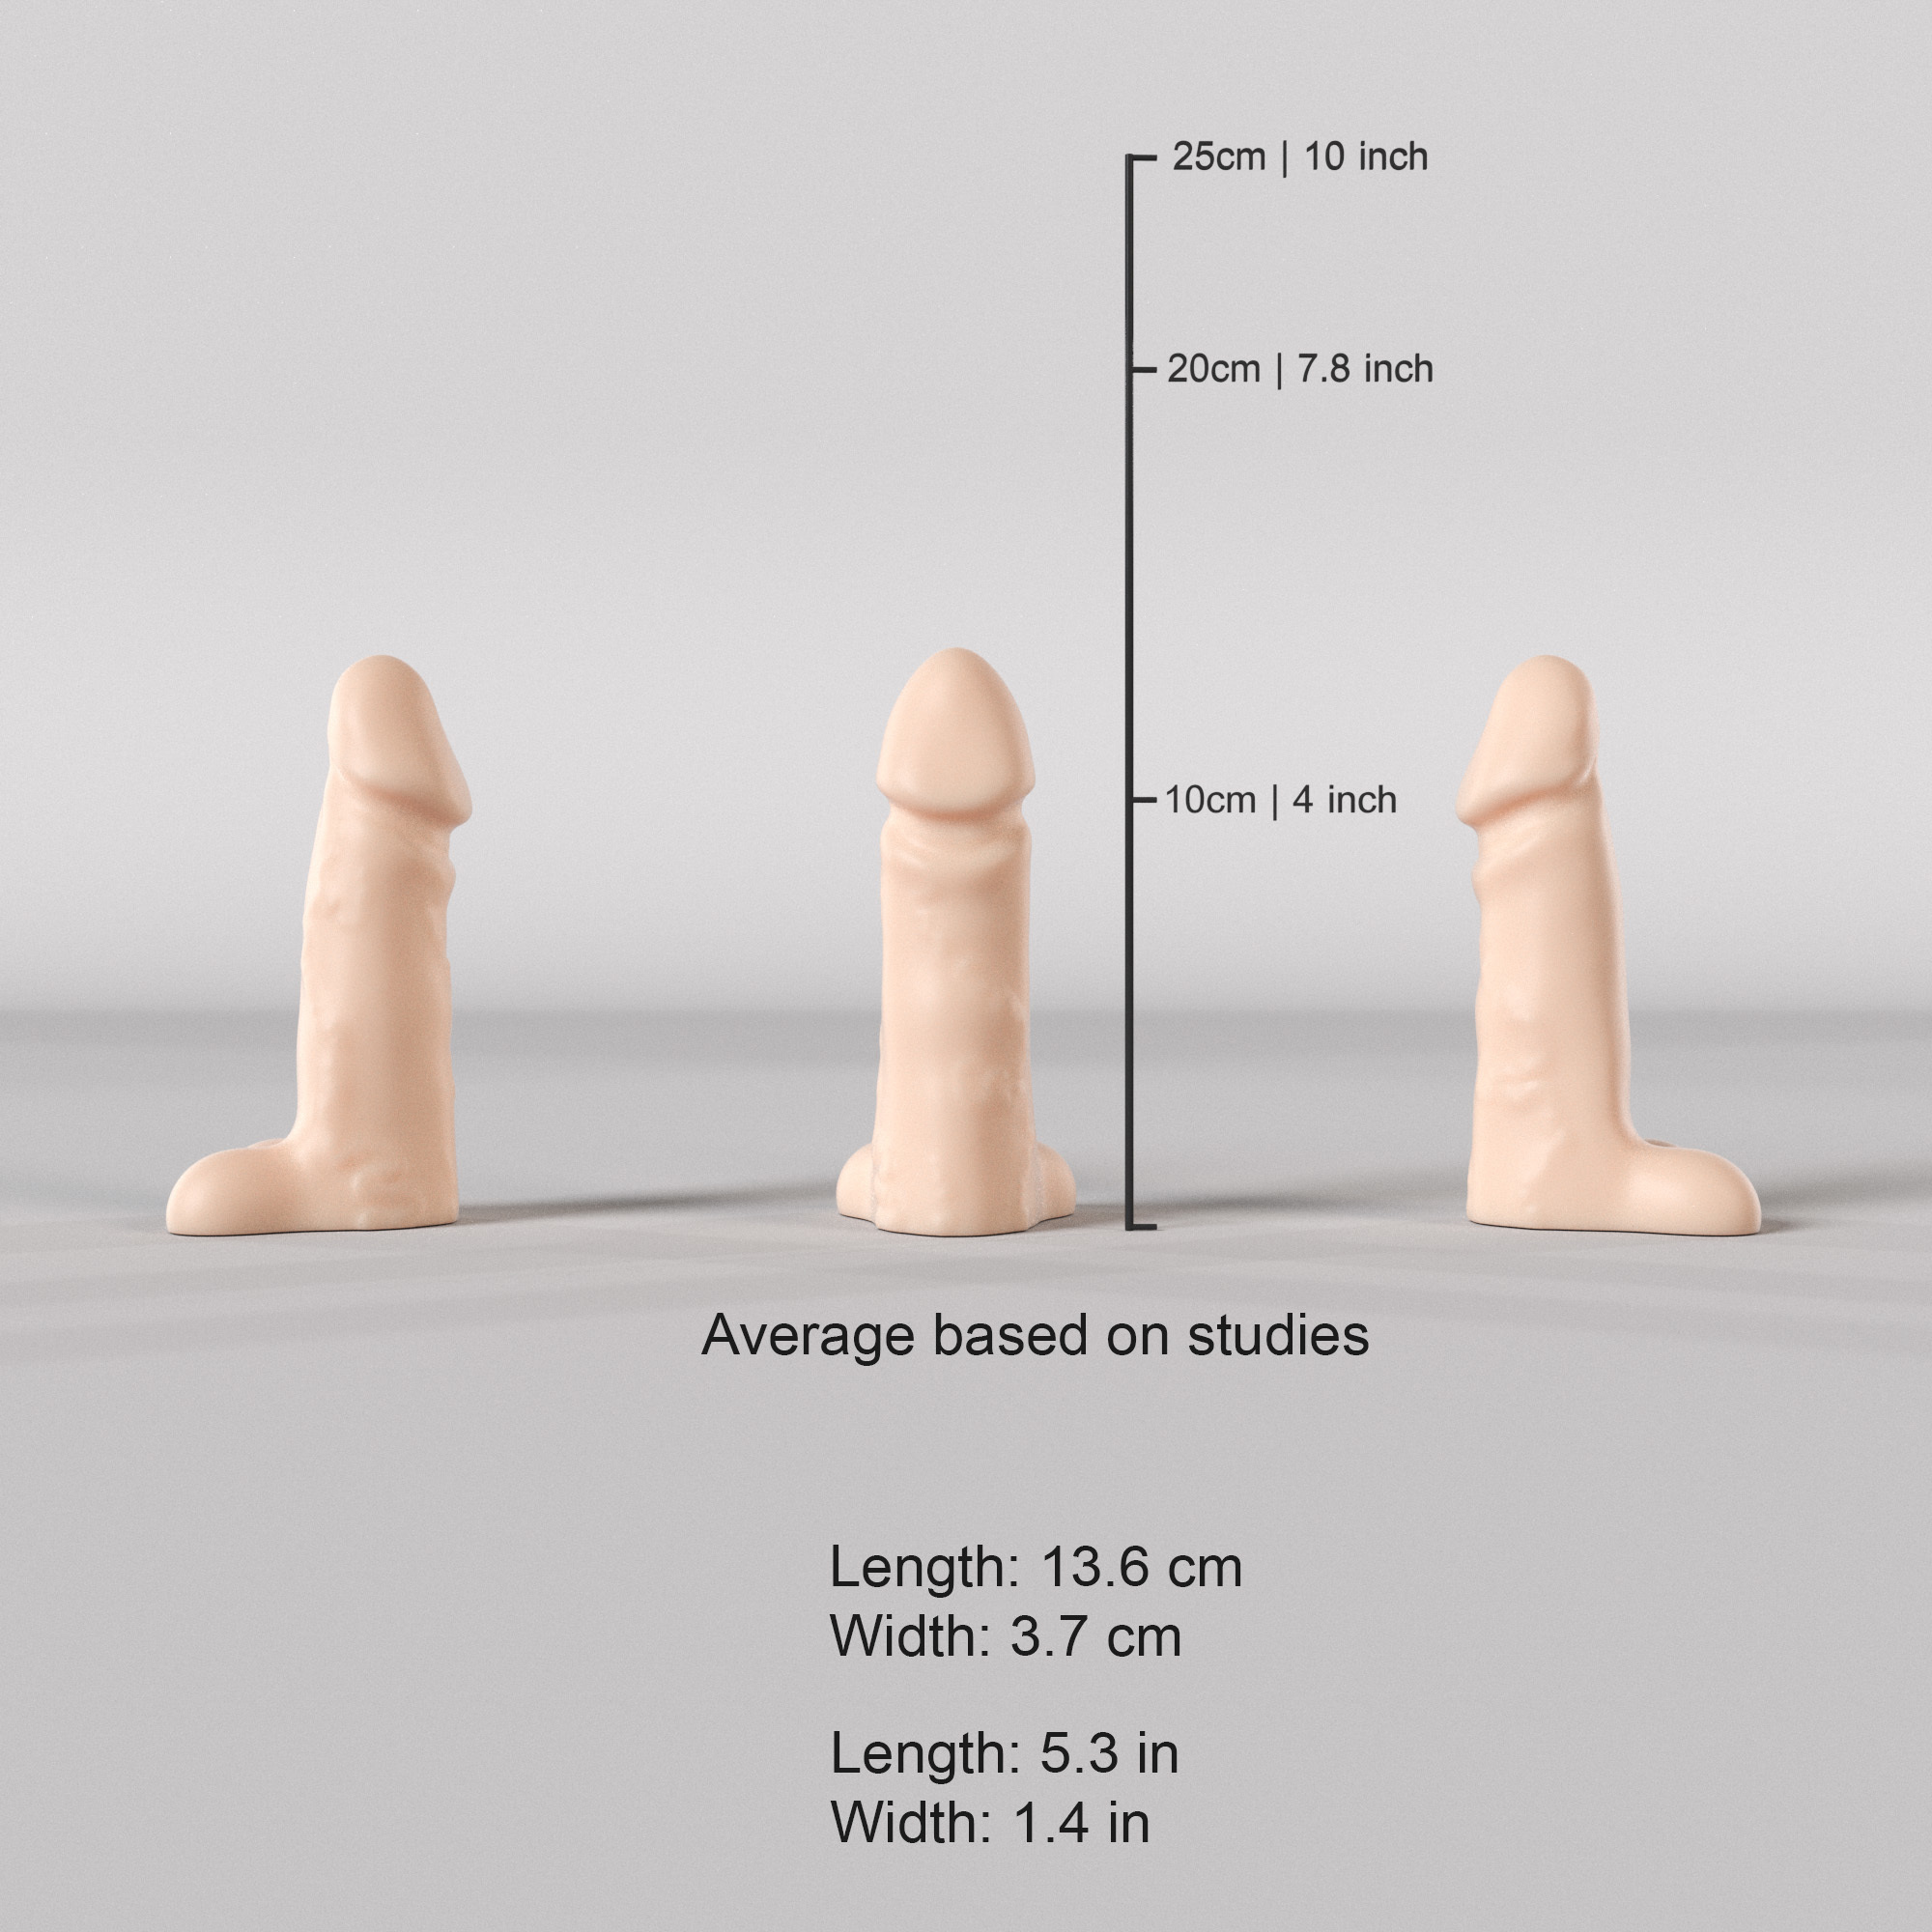 4.5 inch penis